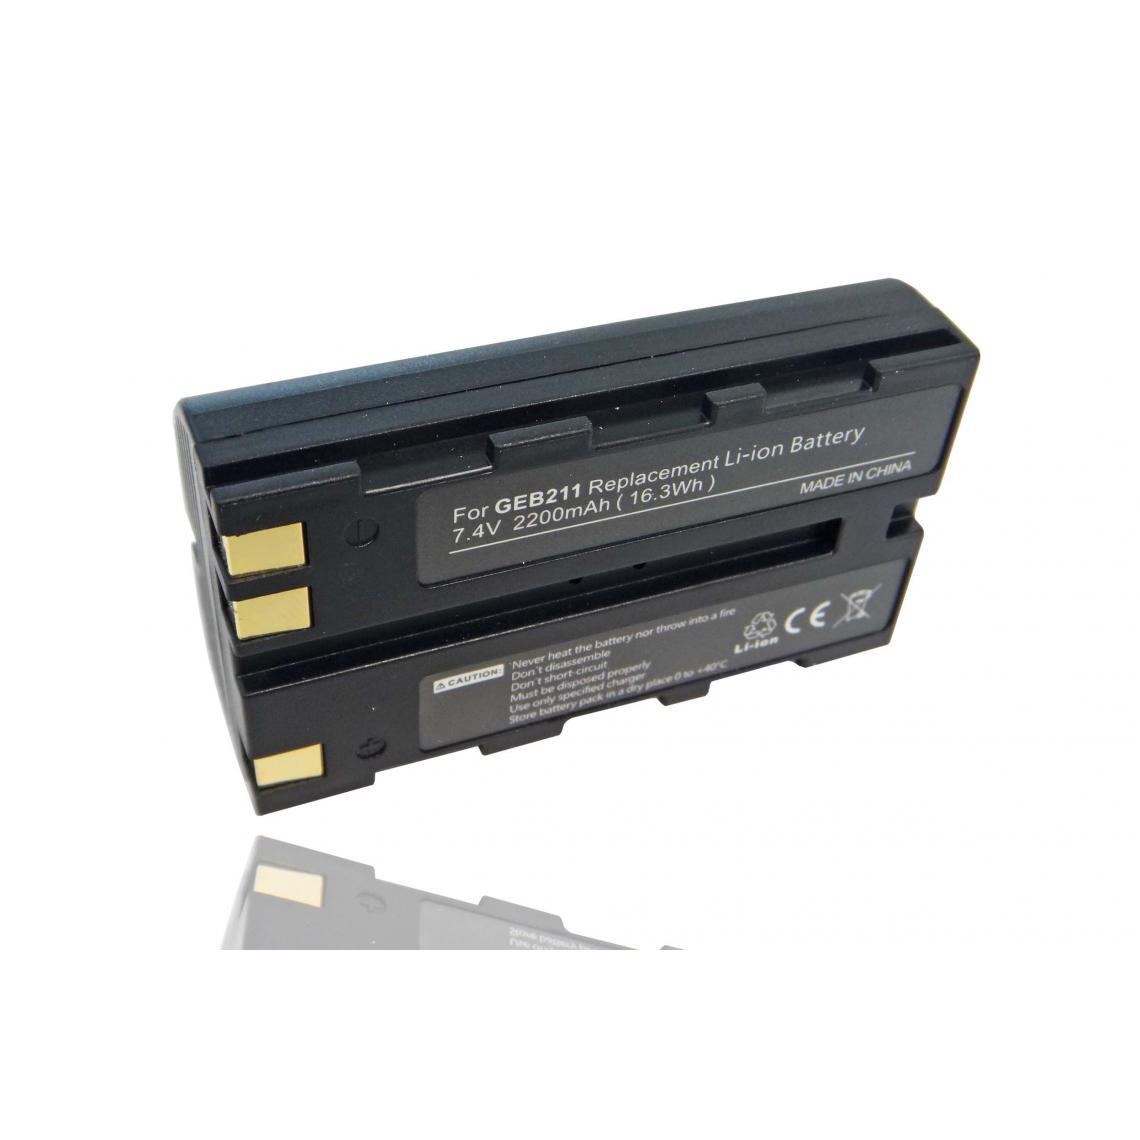 Vhbw - vhbw Batterie compatible avec Leica TC402, TC403, TC405, TC406 dispositif de mesure laser, outil de mesure (2200mAh, 7,4V, Li-ion) - Piles rechargeables